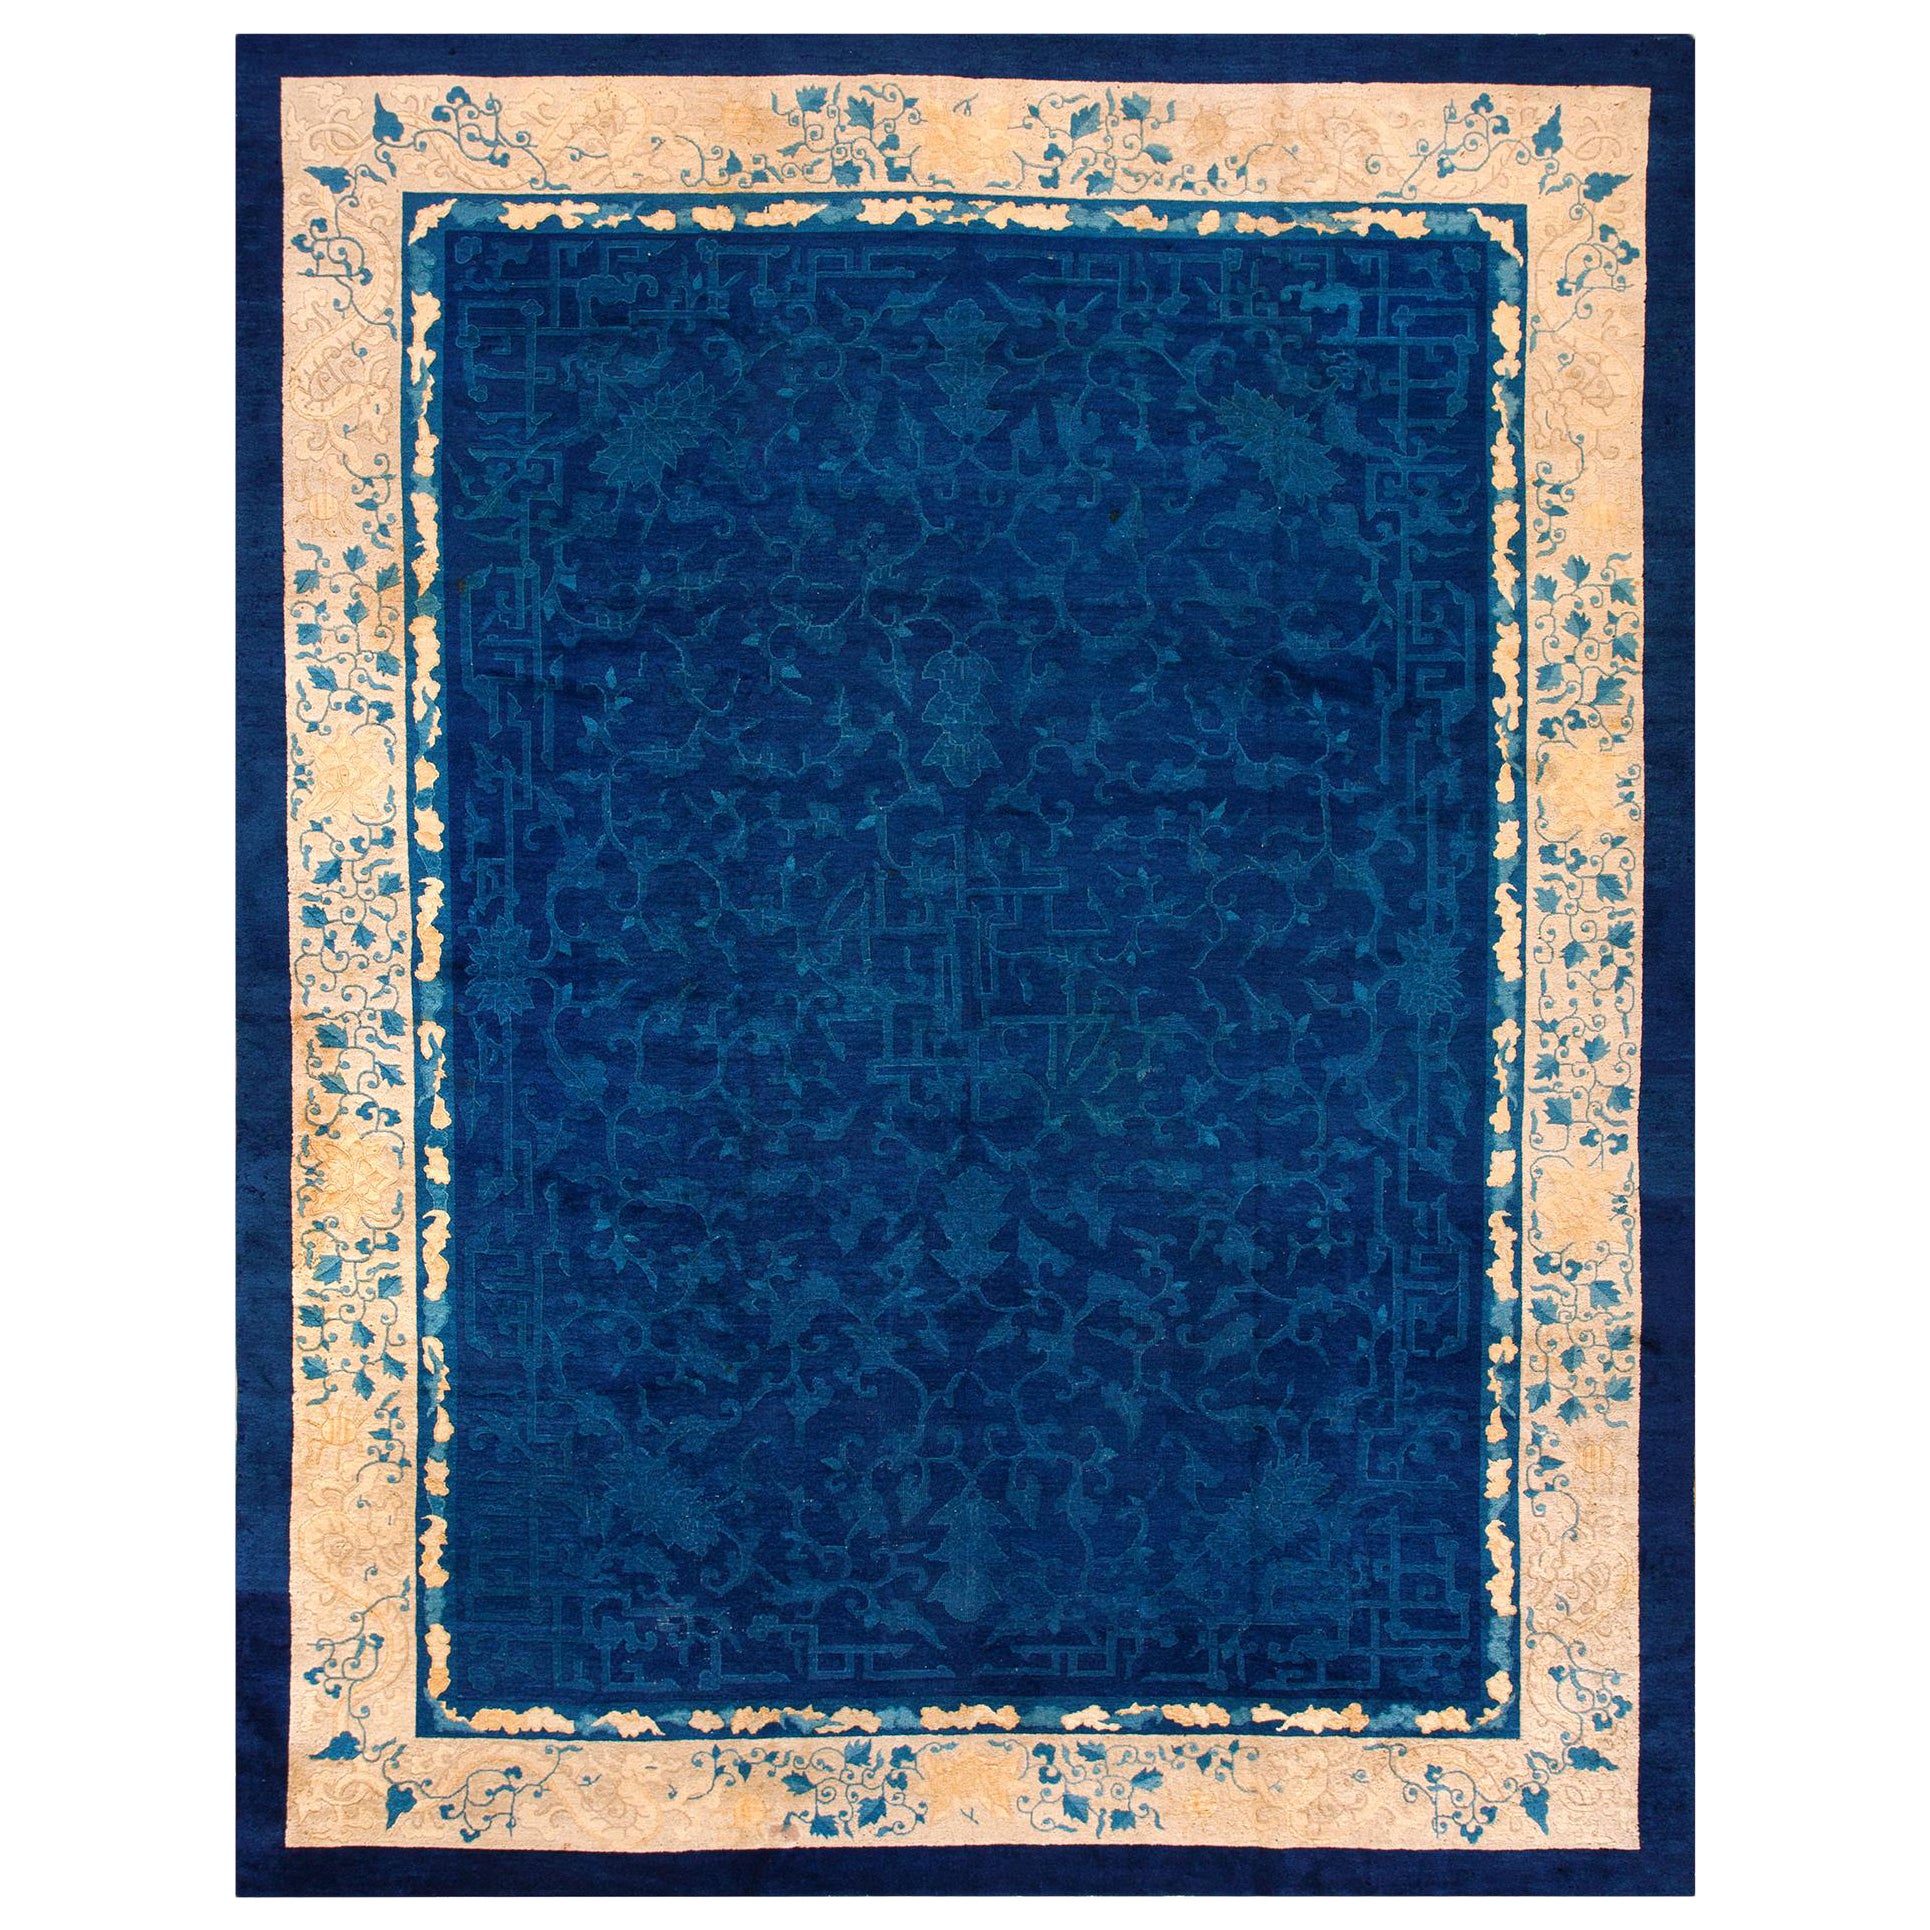 Early 20th Century Chinese Peking Carpet ( 9' x 11'9" - 274 x 358 )